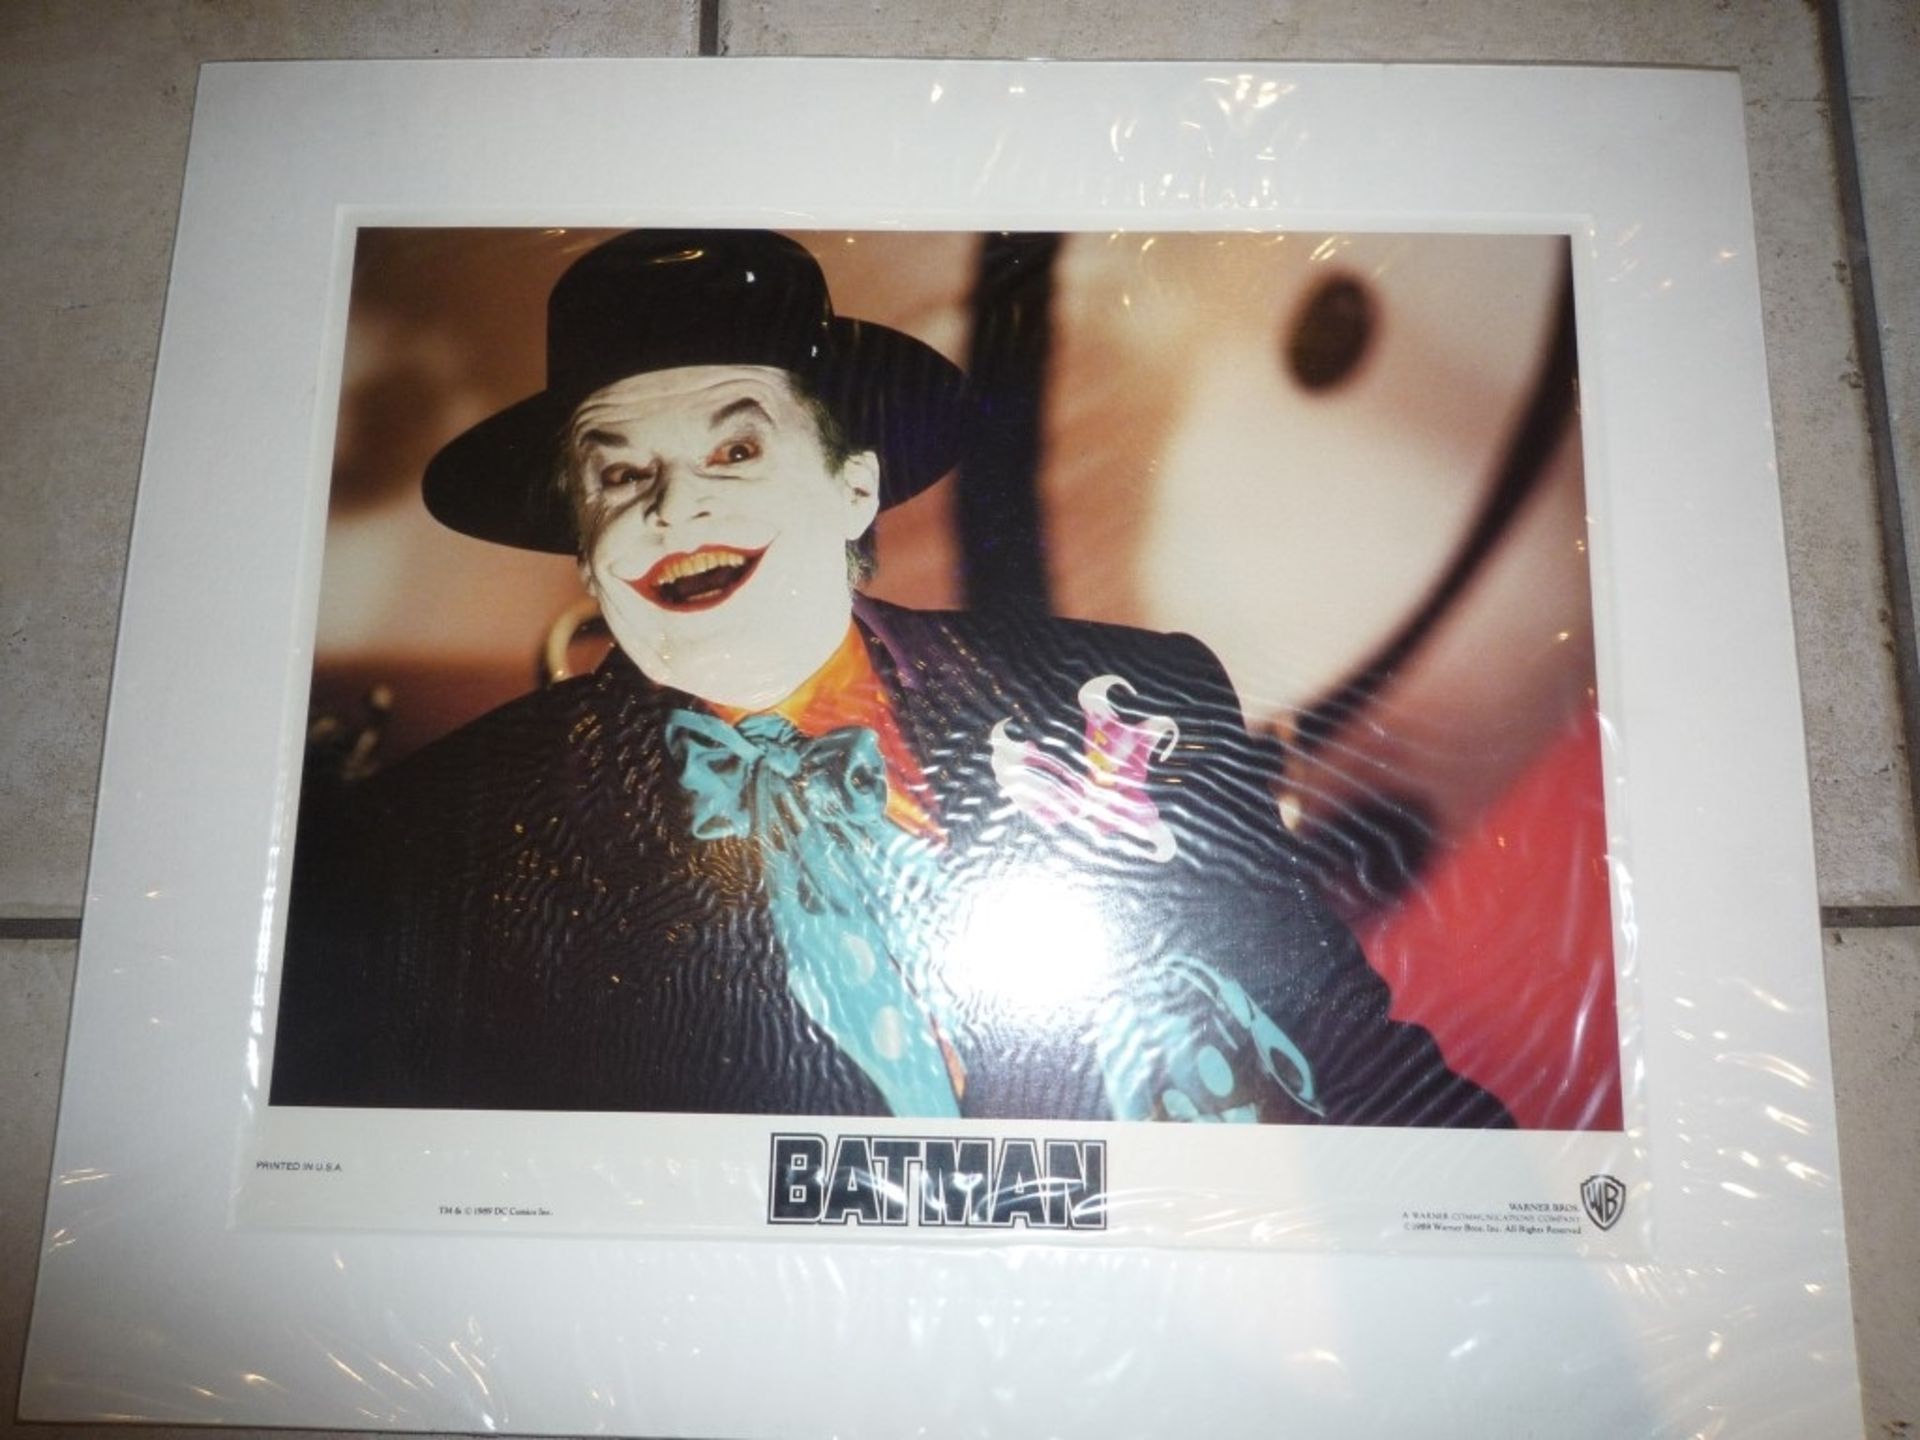 Batman lobby card - Image 2 of 2